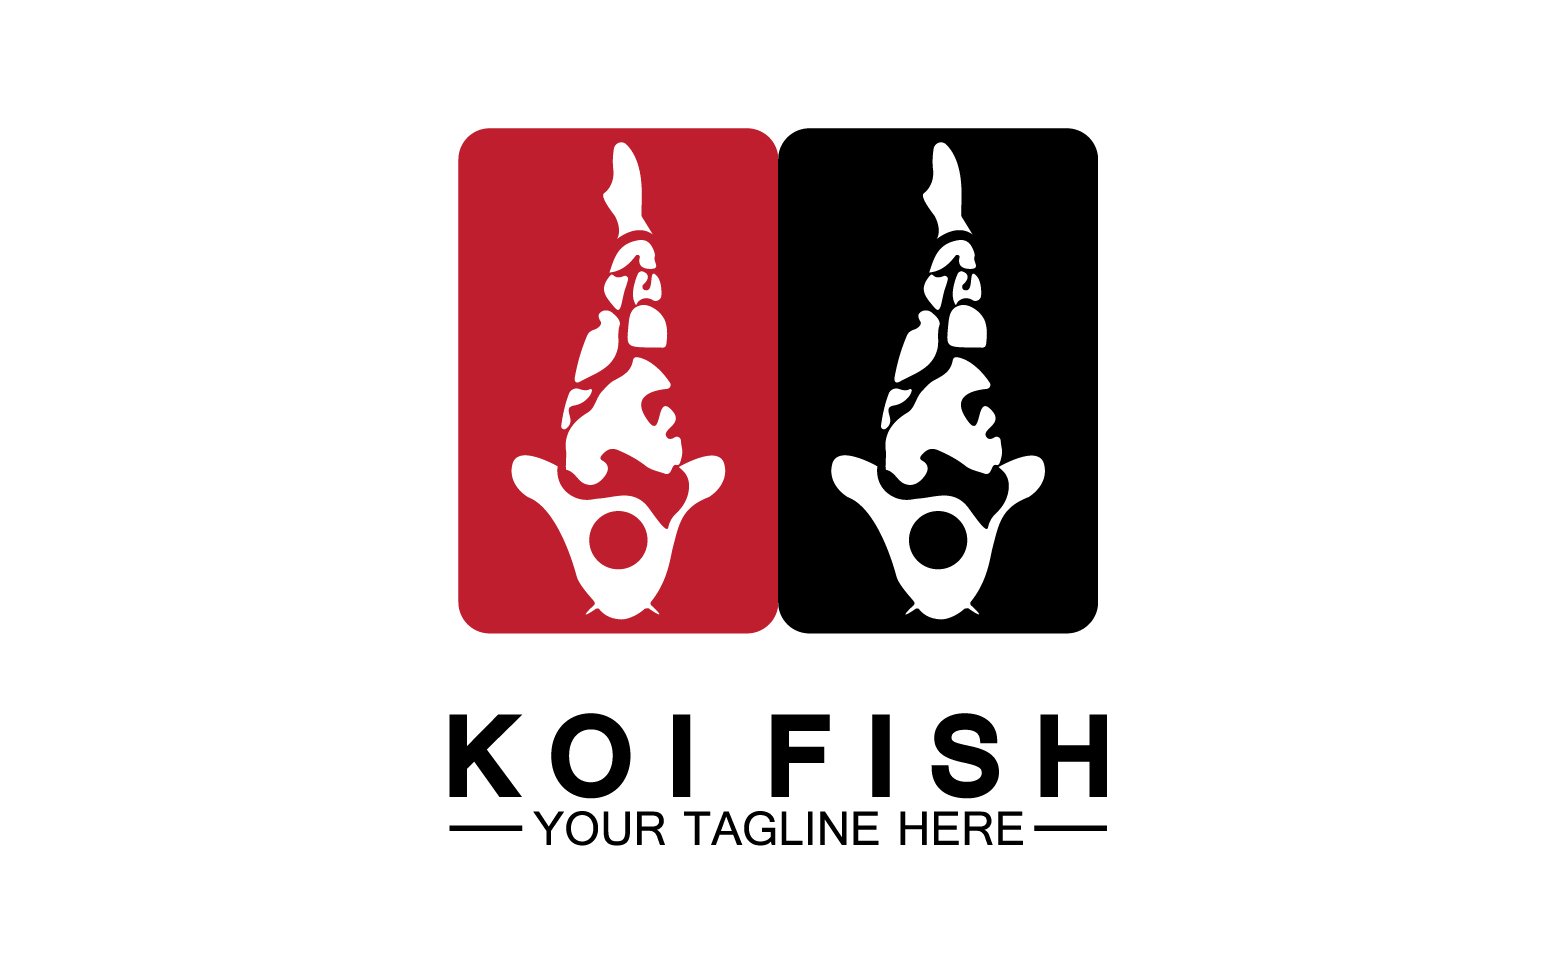 Fish koi black and red icon logo vector v37